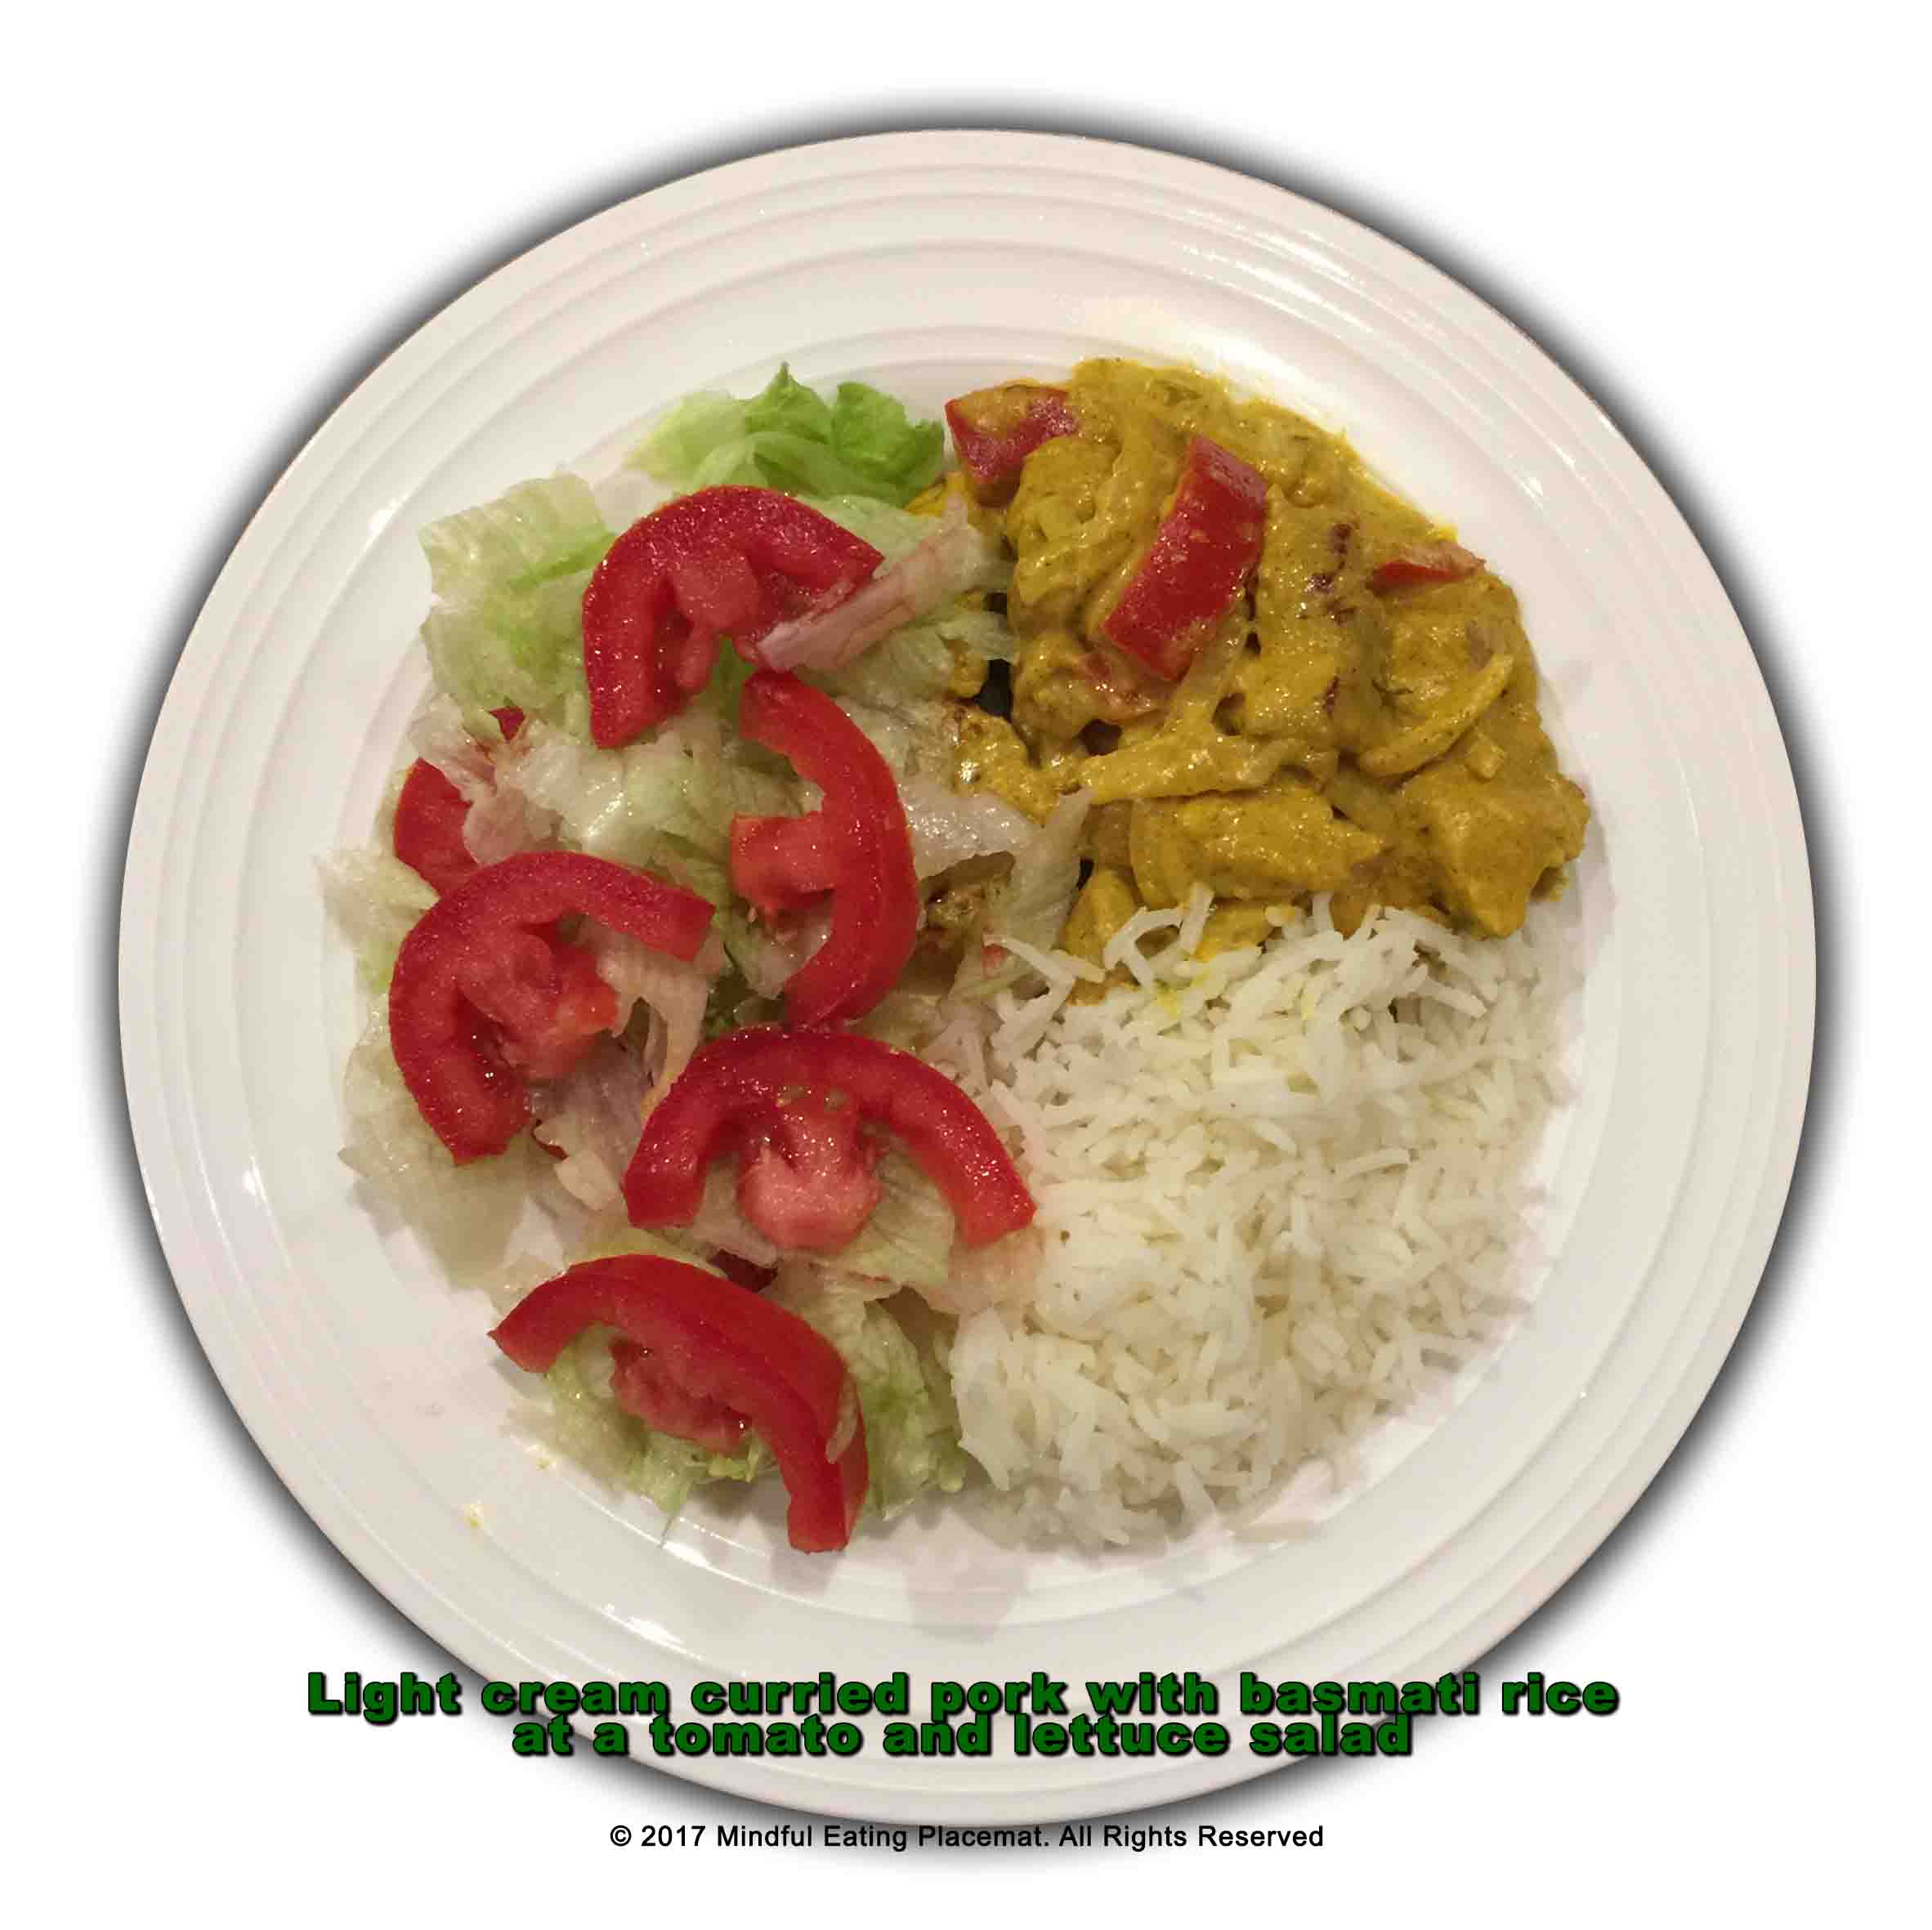 Curried pork with basmati rice and salad